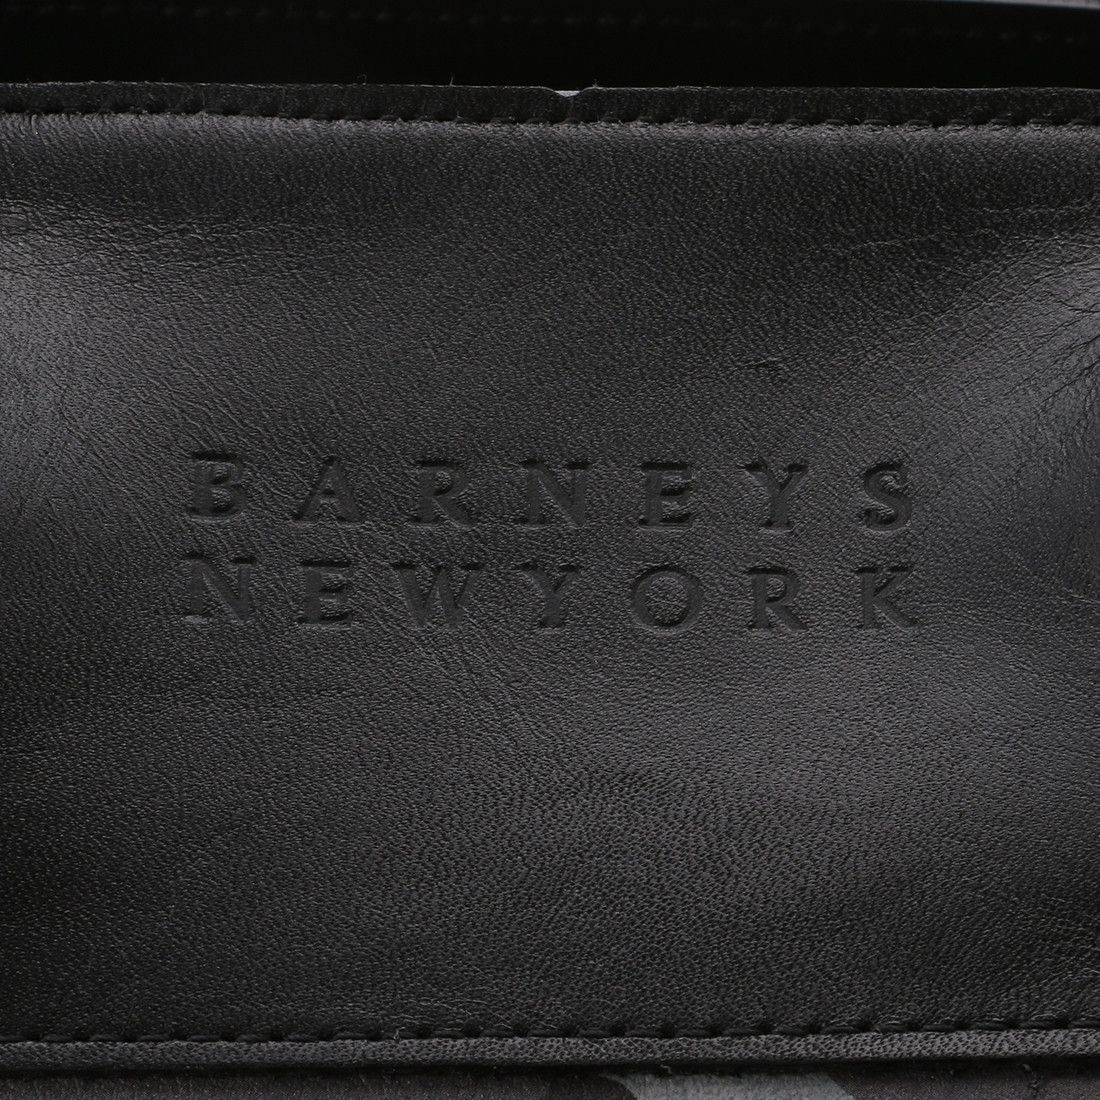 BARNEYS NEW YORK（バーニーズ ニューヨーク）オンラインストア限定カモフラージュ柄ボストンバッグ